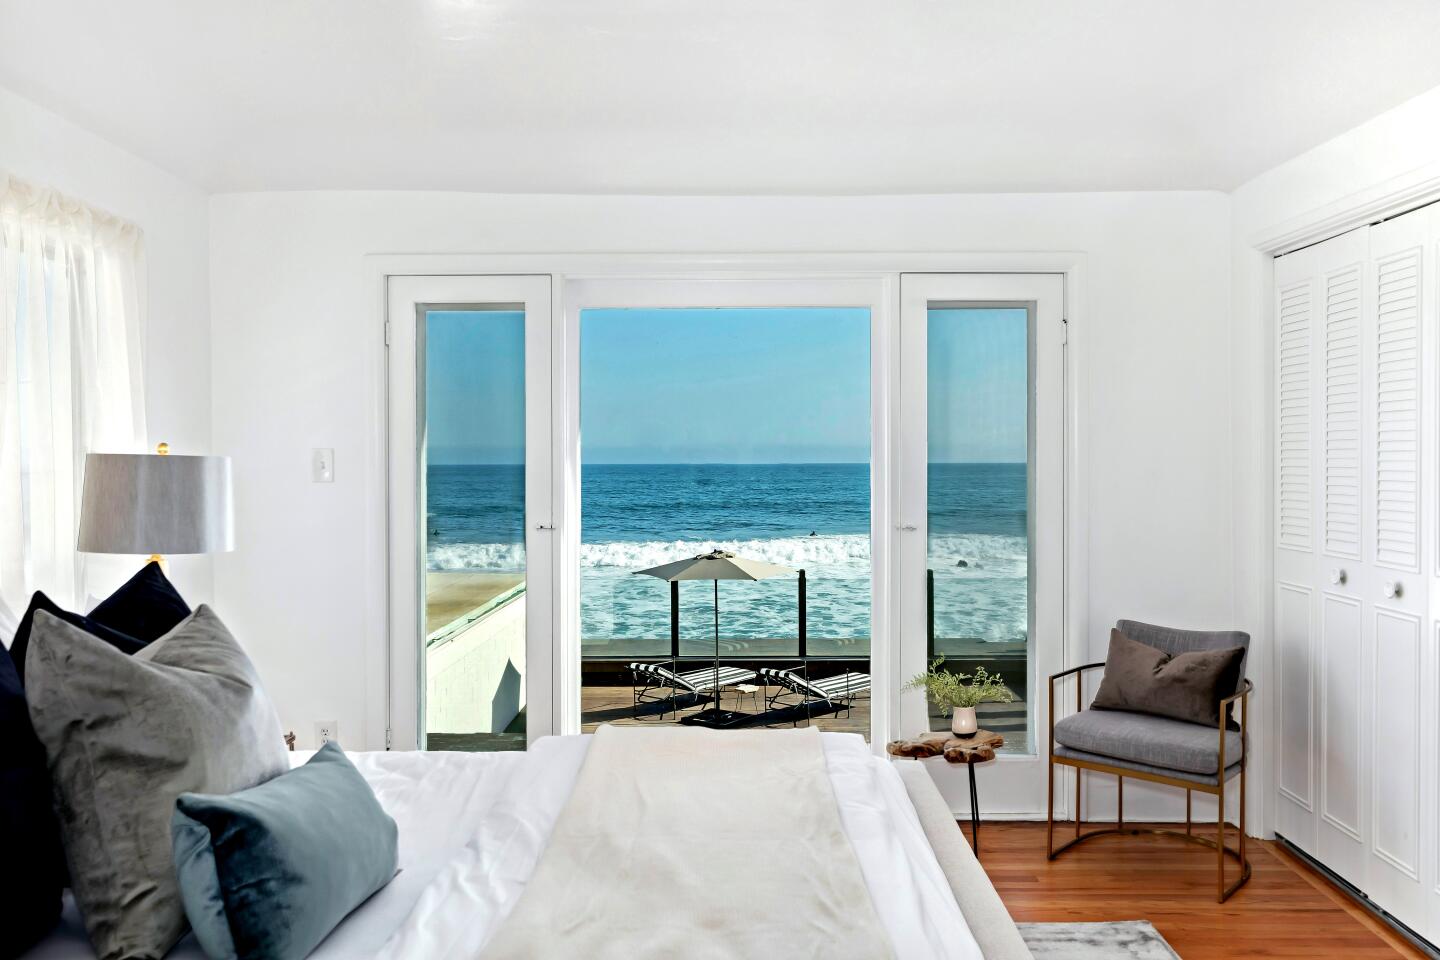 Large windows in a bedroom look onto the ocean.